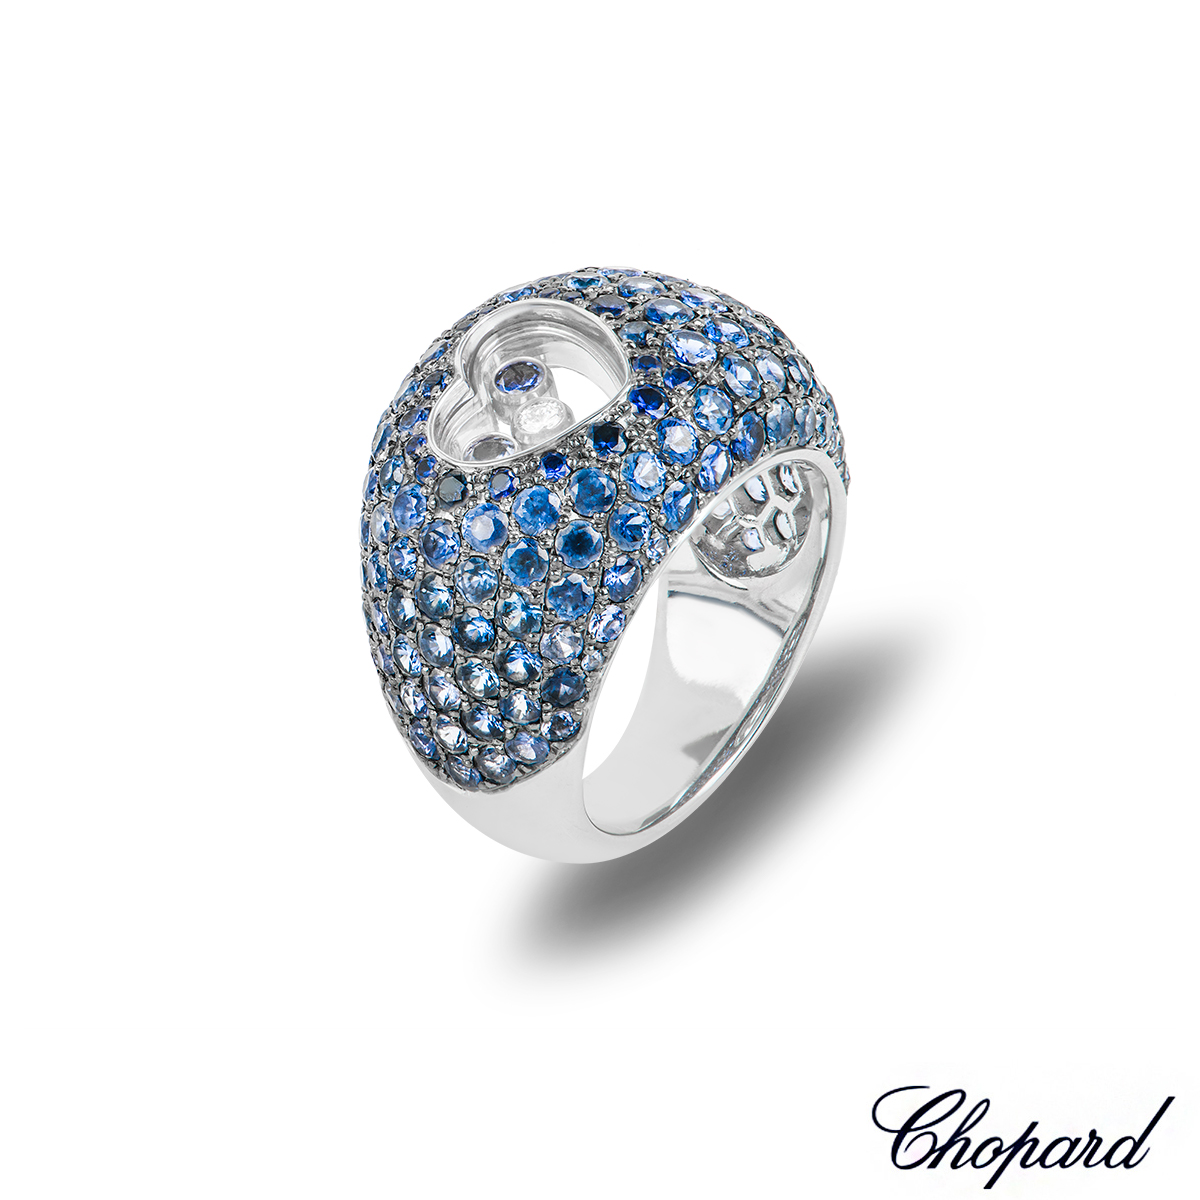 Chopard White Gold Sapphire & Diamond Ring 82/7059-1110